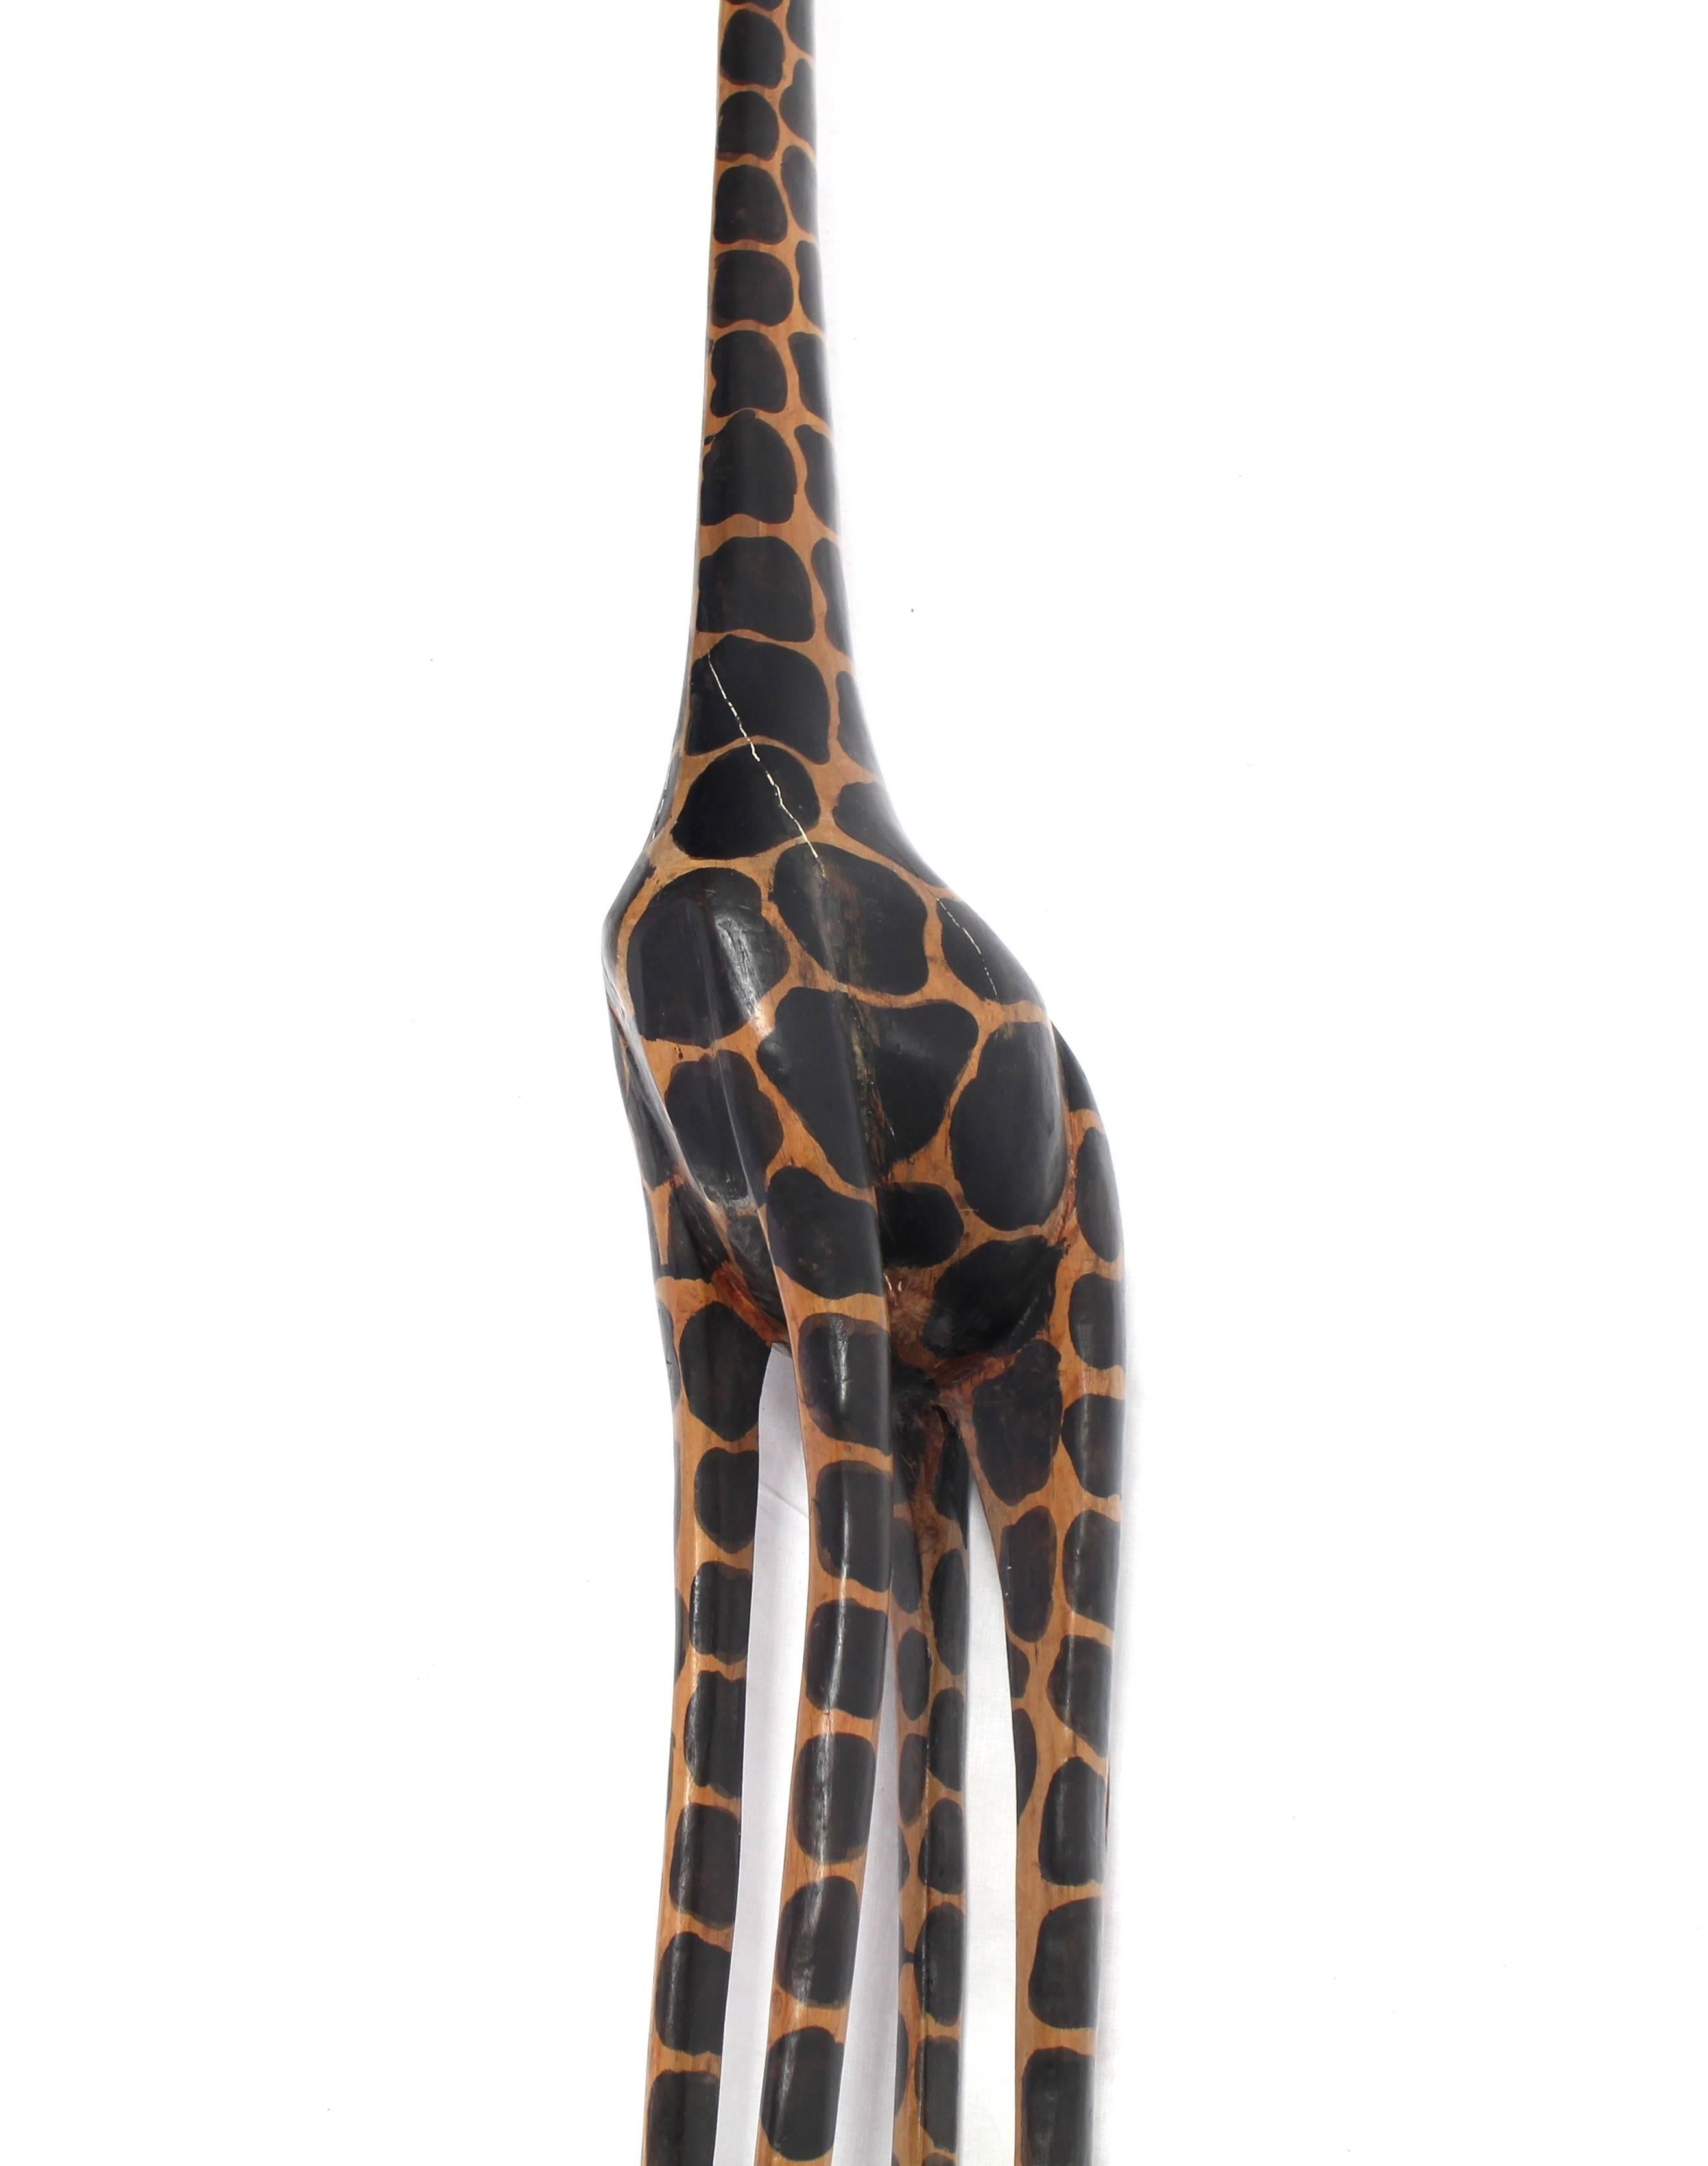 10' Tall Carved Sculpture of a Giraffe on Long Legs. 1